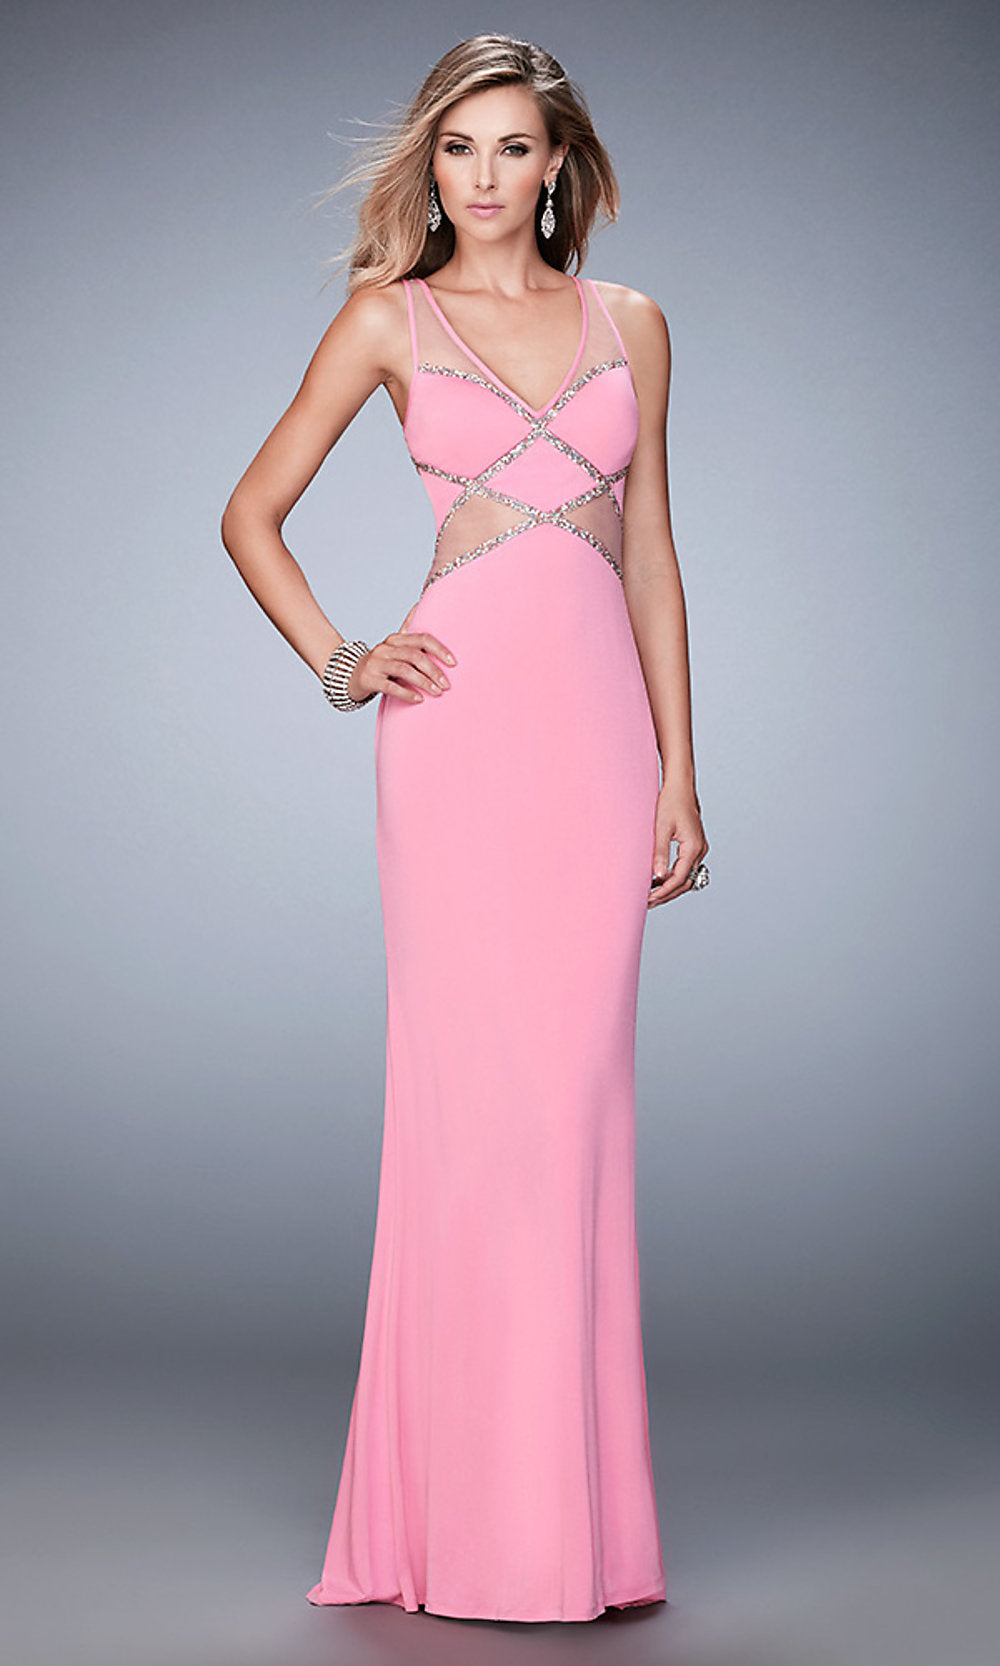 Pink La Femme Prom Dress with V-Neck and Open Back